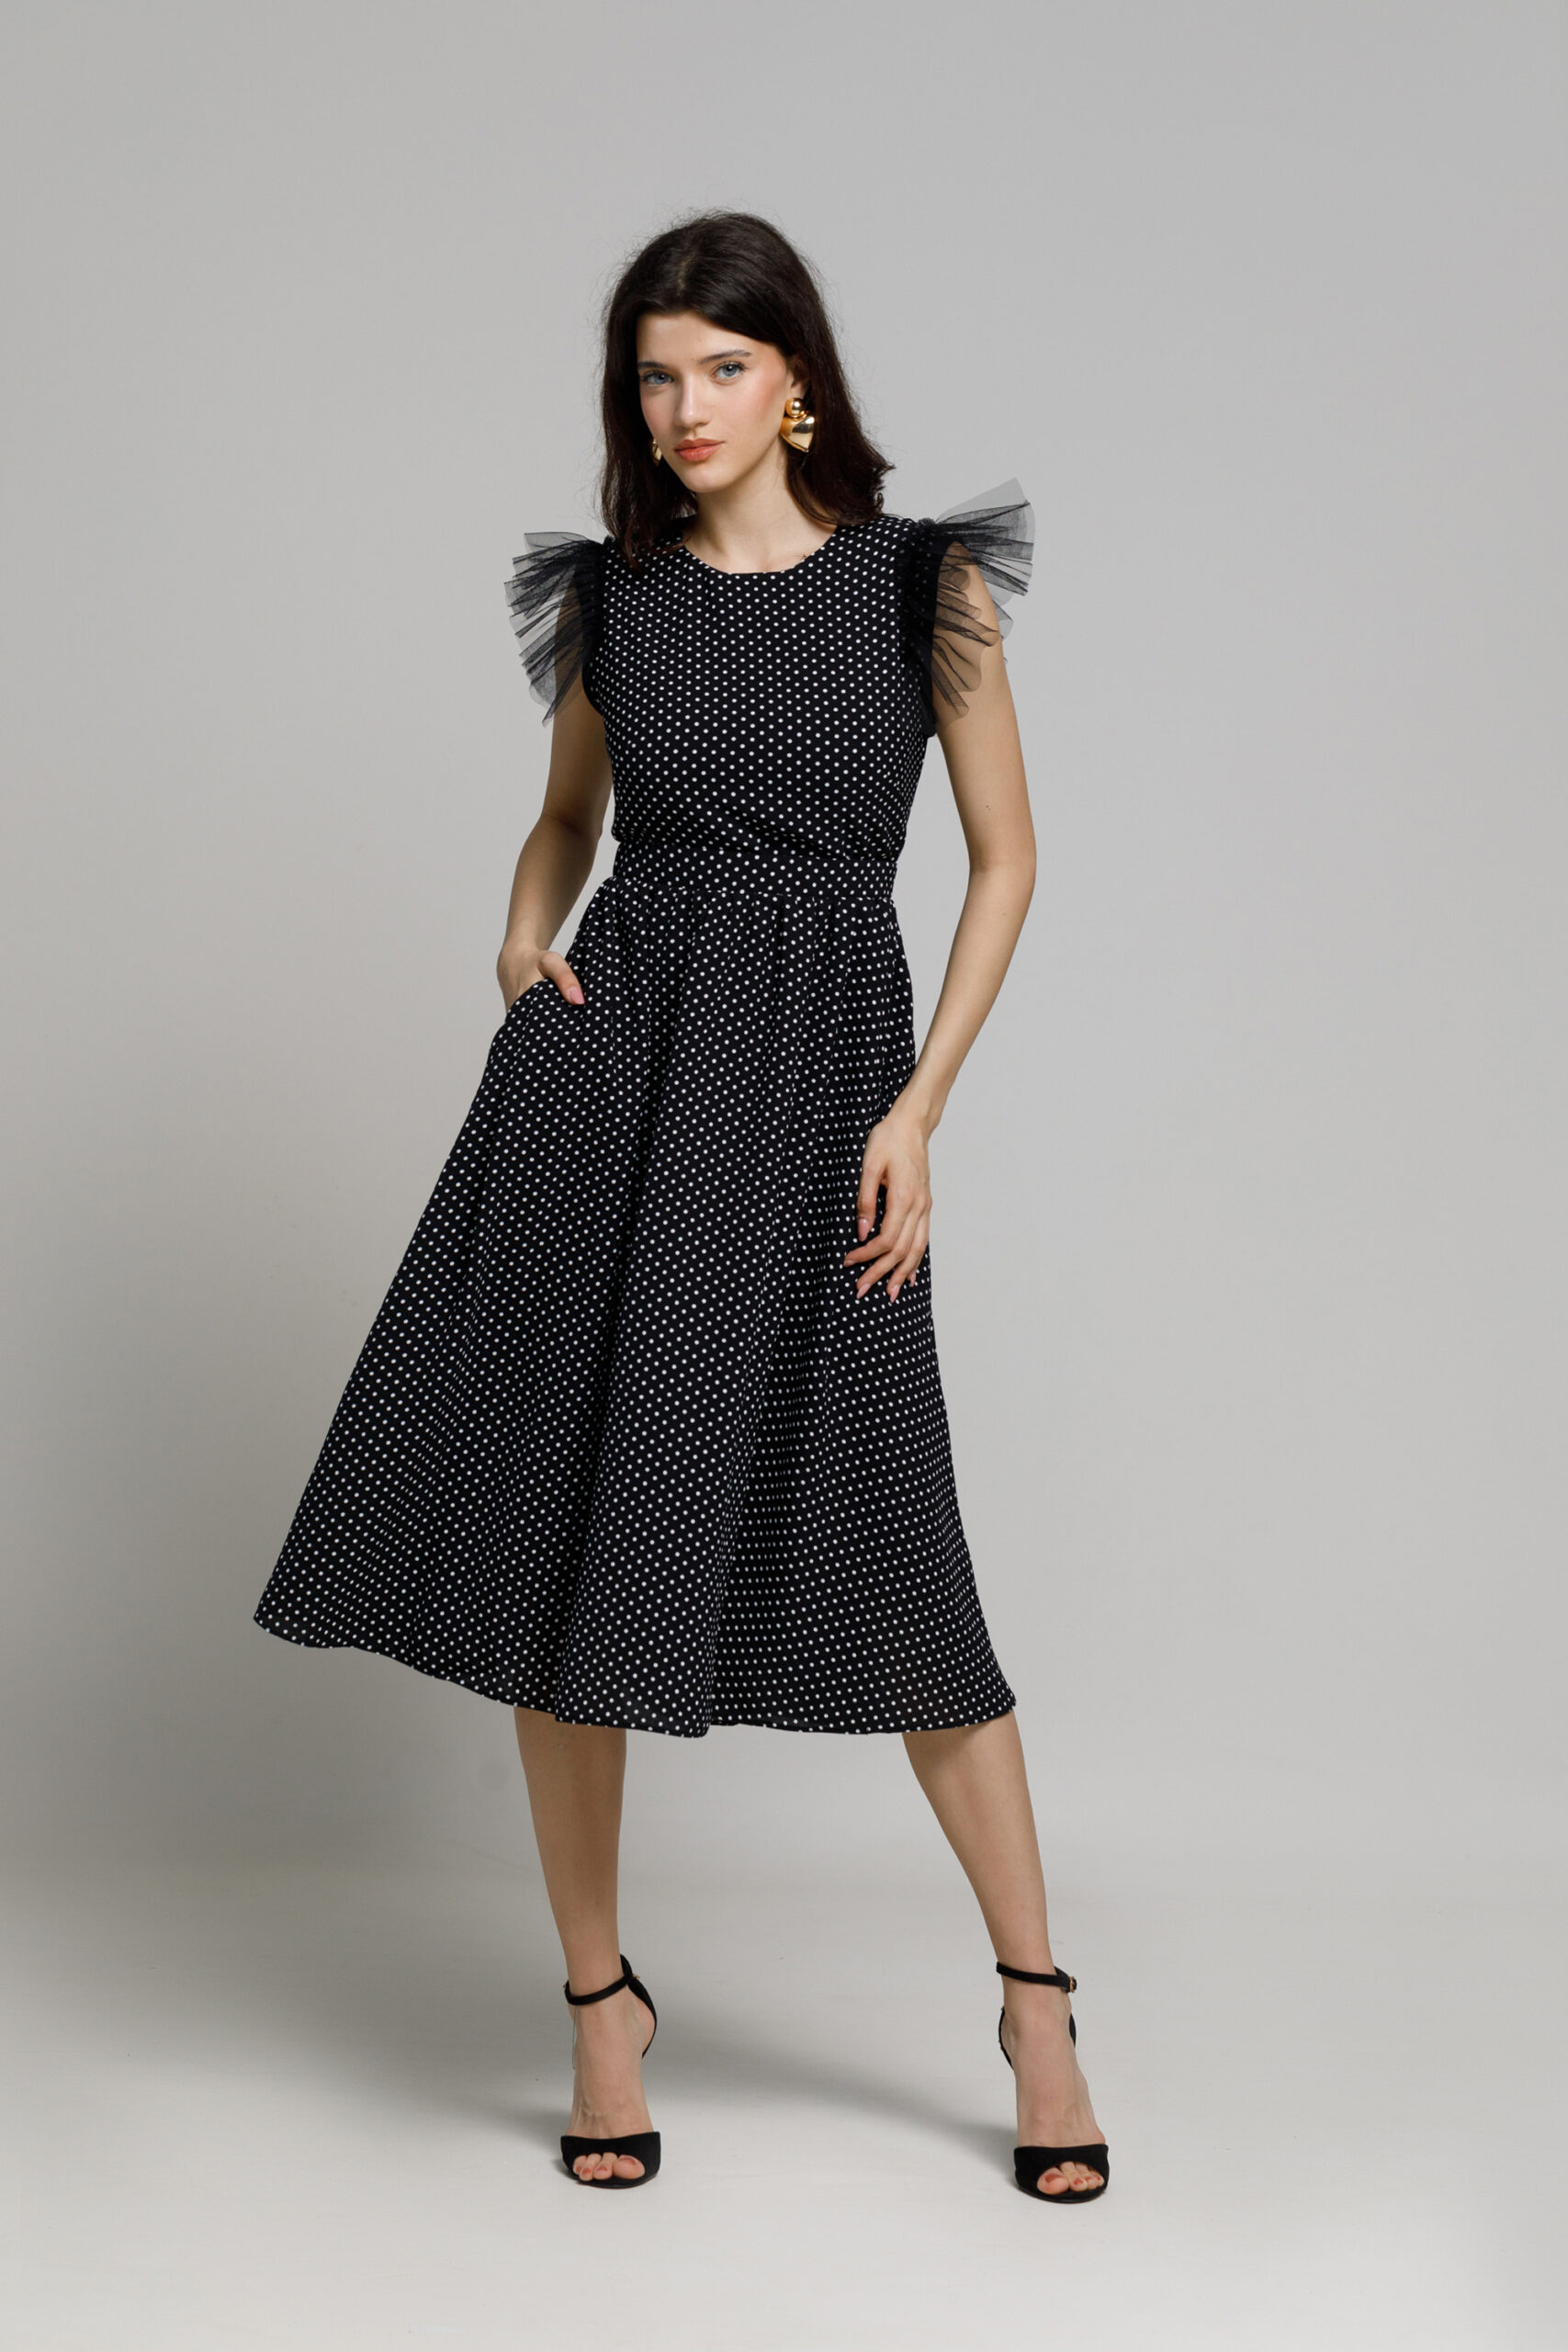 ABRA dress in black viscose with white polka dots. Natural fabrics, original design, handmade embroidery